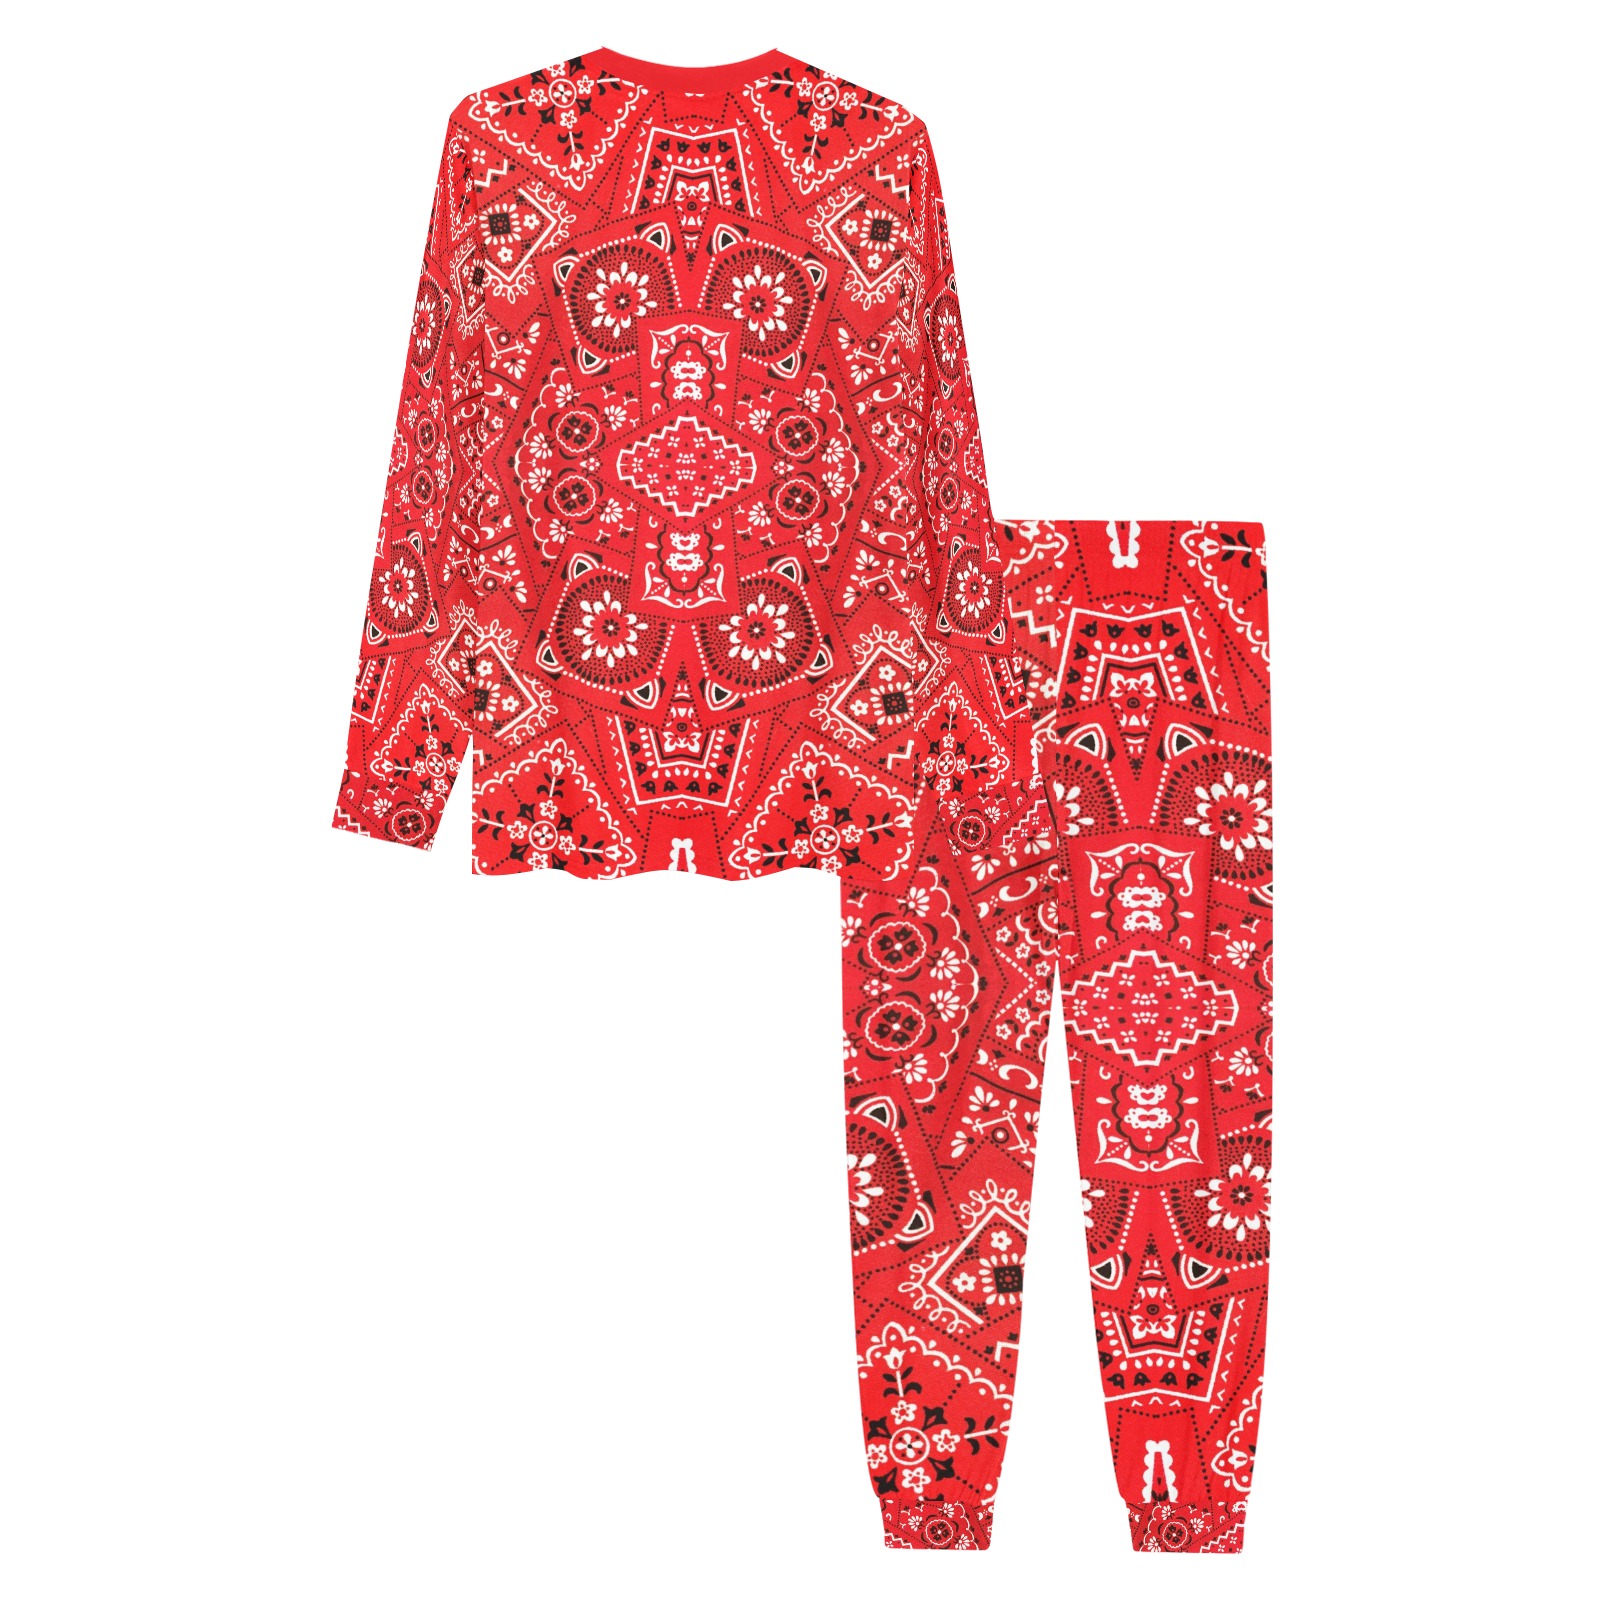 Red Bandana Squares Men's All Over Print Pajama Set with Custom Cuff